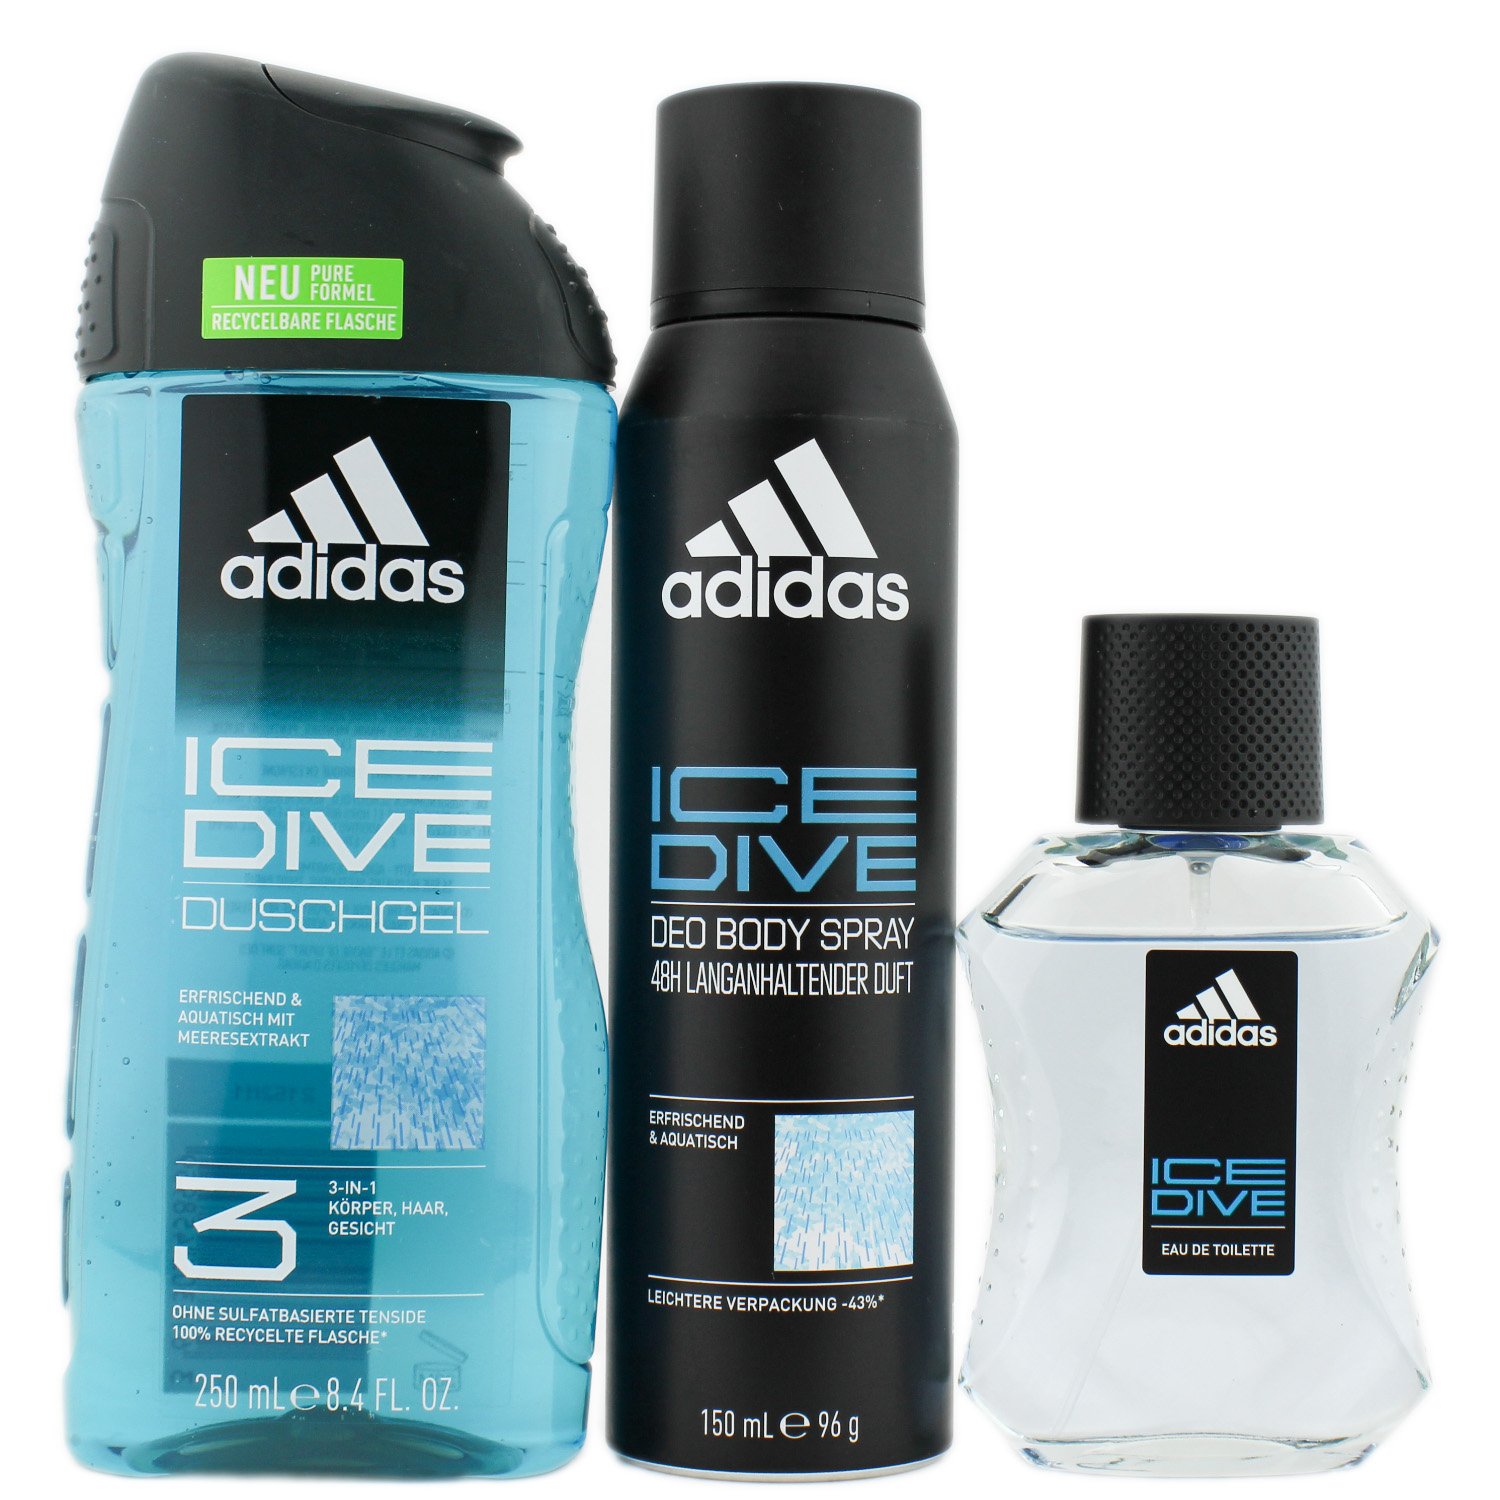 Adidas Ice Dive Set Eau de Toilette 50ml, Deodorant Body Spray 150ml & Shower Gel 250ml